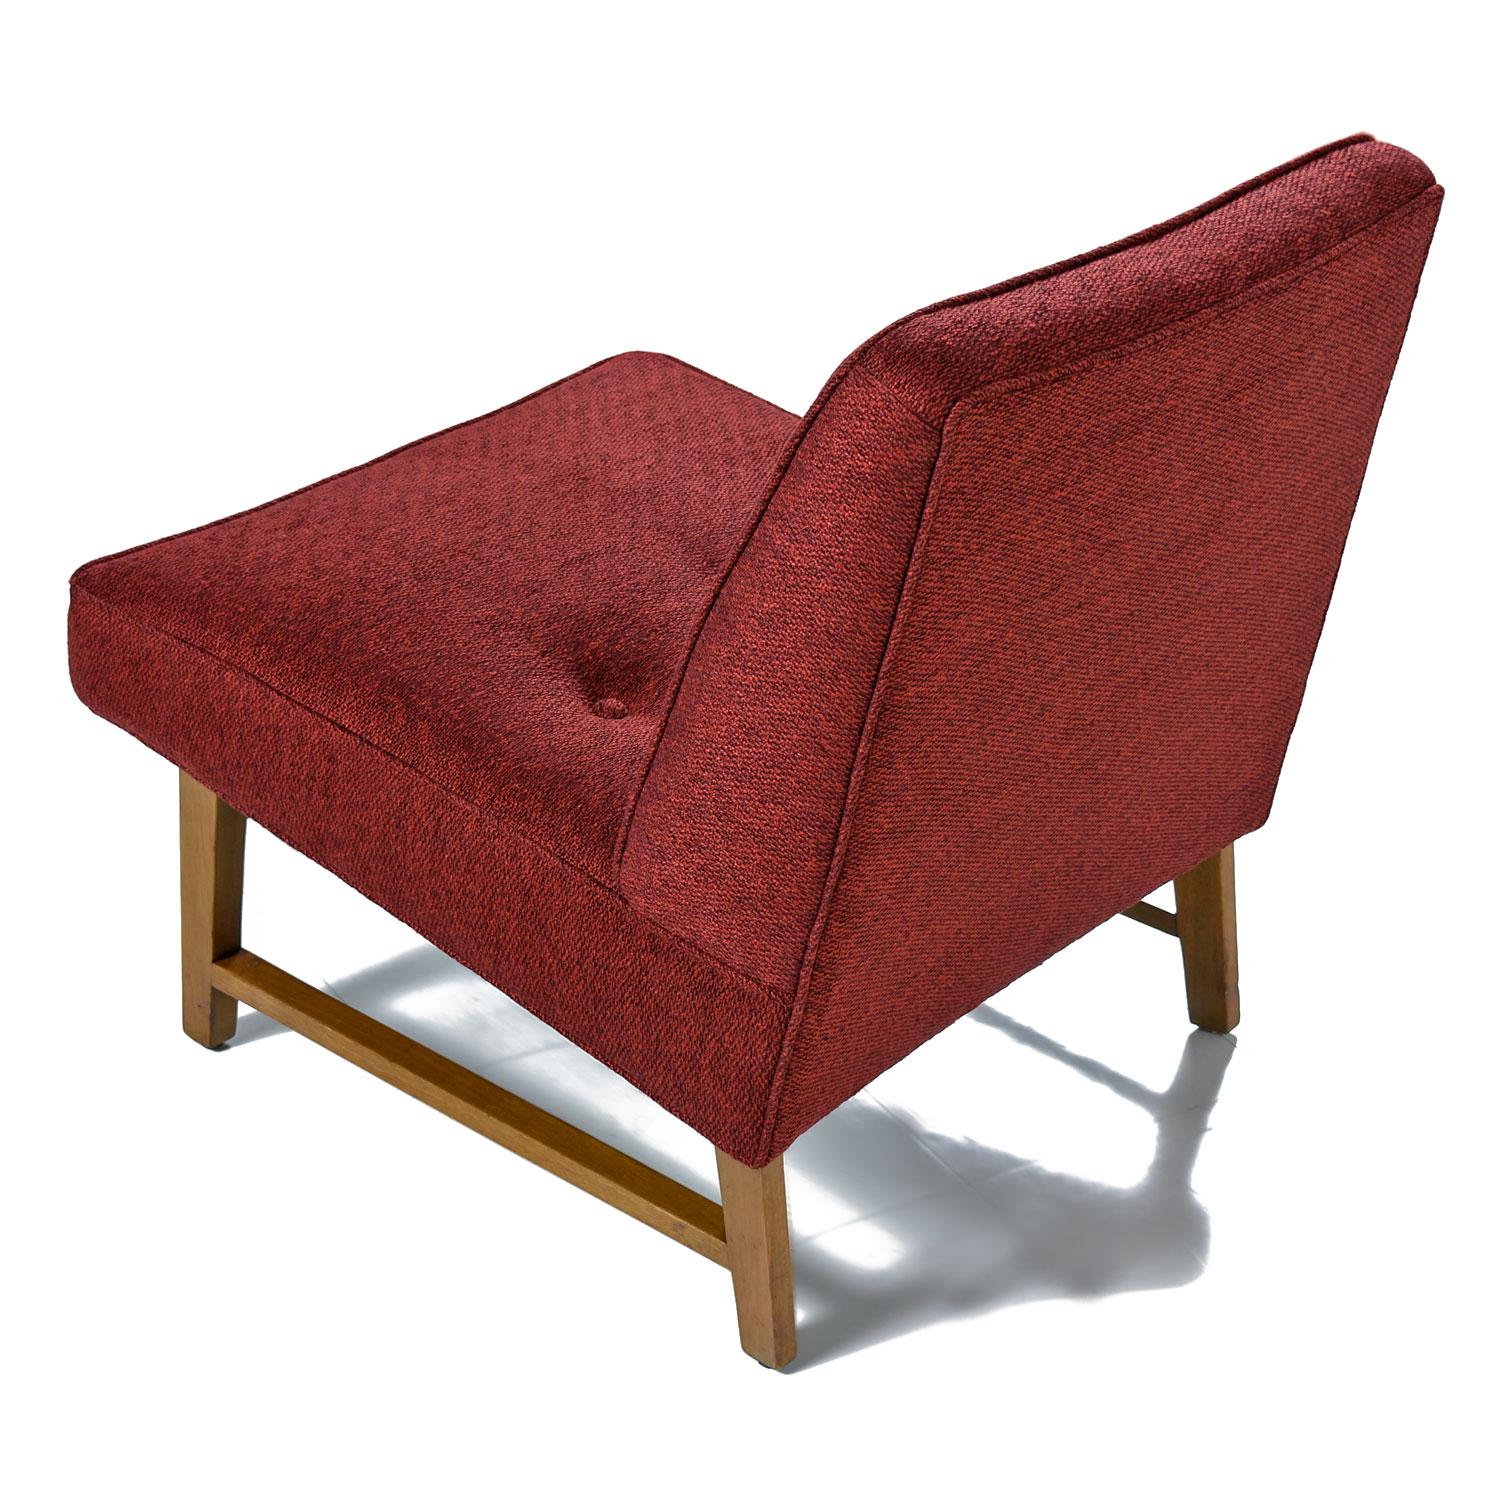 American Edward Wormley for Dunbar Mahogany Slipper Chairs Lounge Chair Set, Restored